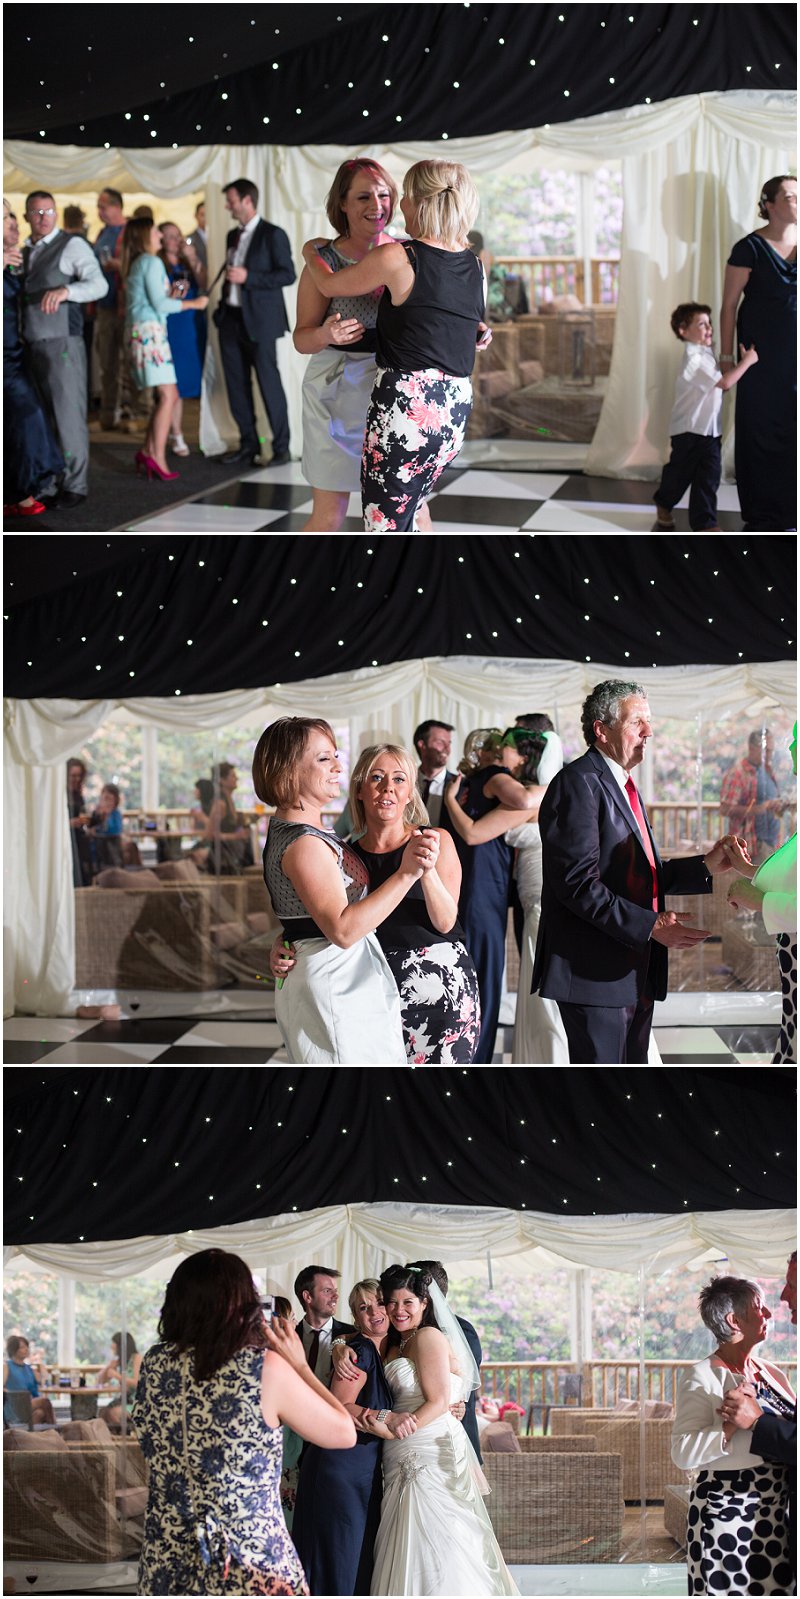 Guests dancing at Soughton Hall wedding evening reception